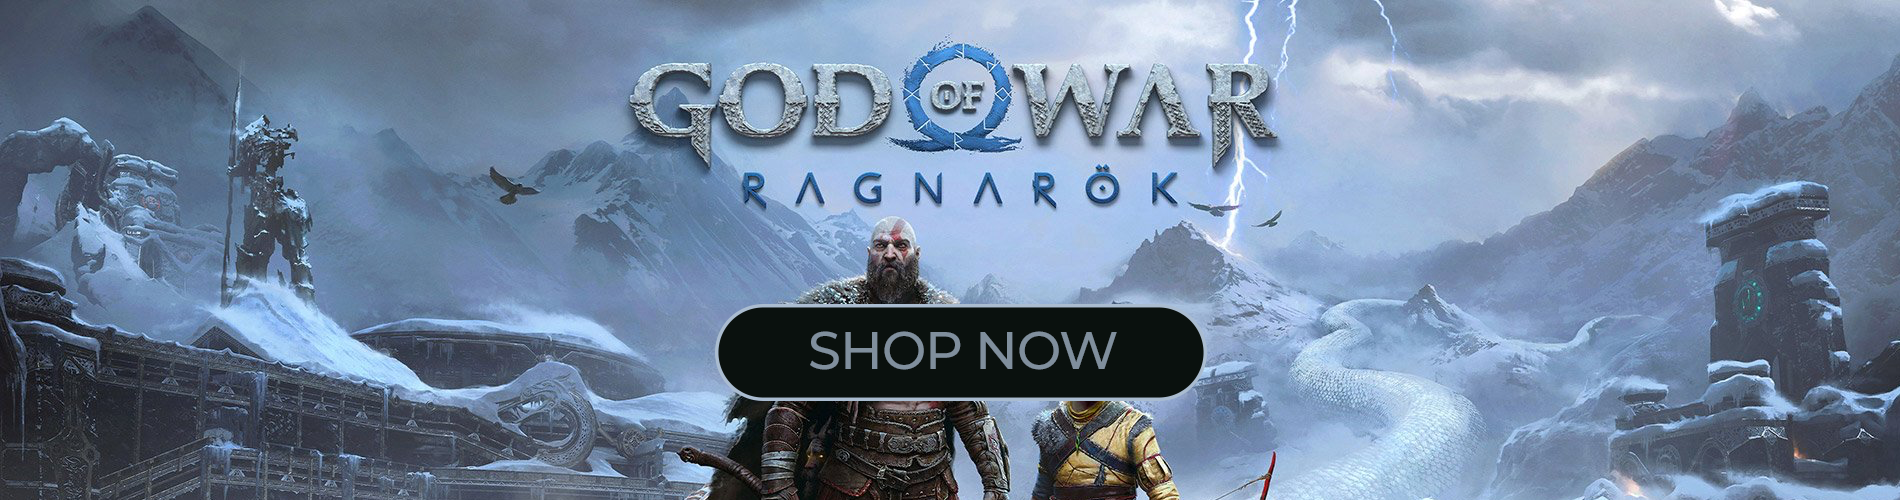 God of War Ragnarök, Pre-order Now